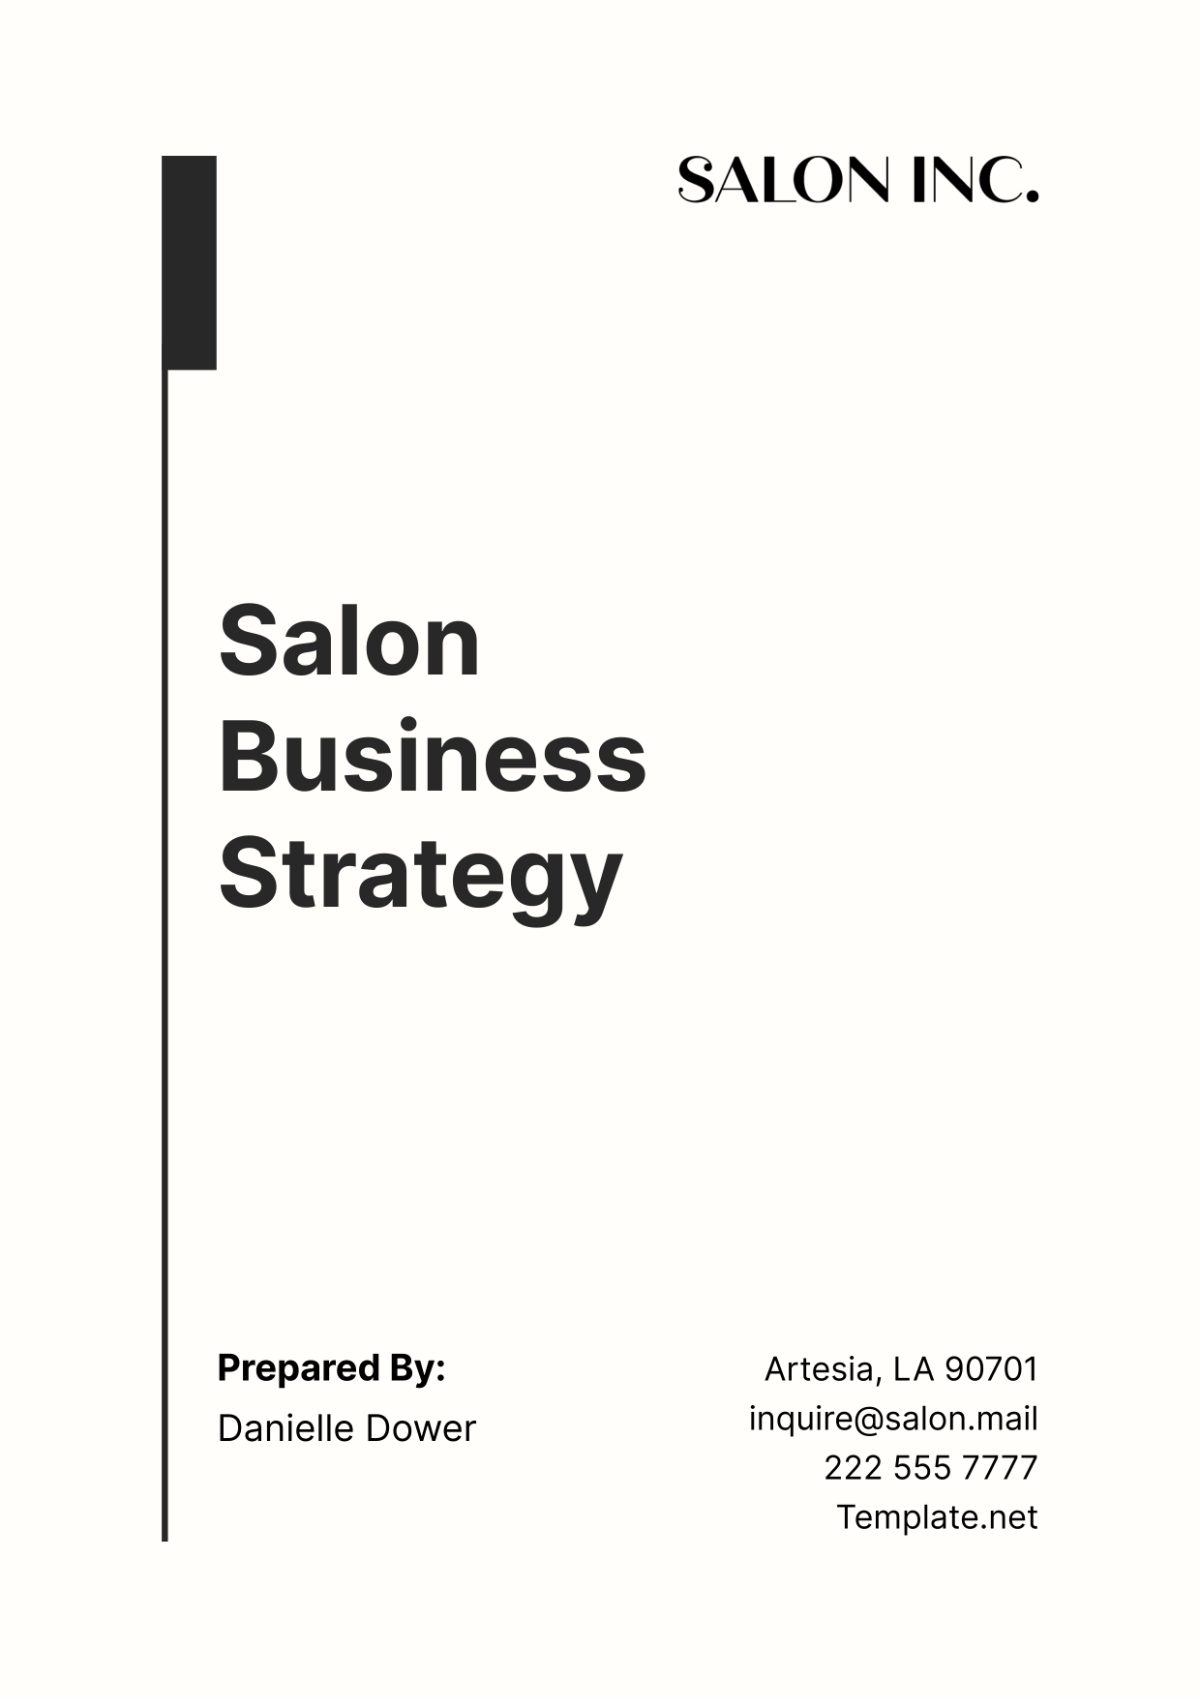 Salon Business Strategy Template